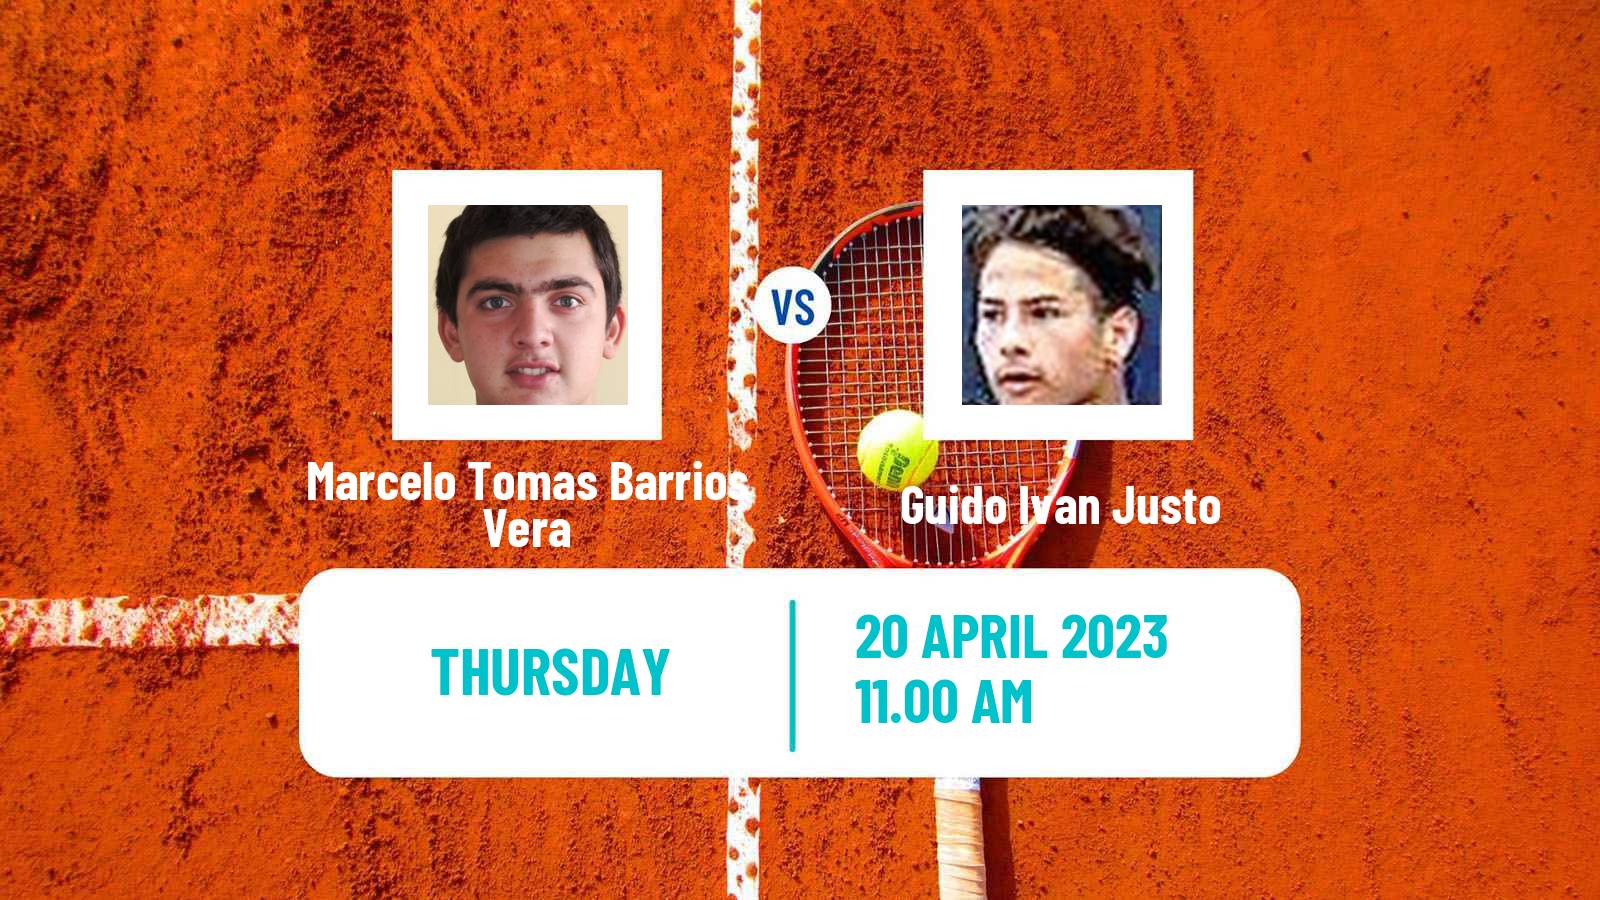 Tennis ATP Challenger Marcelo Tomas Barrios Vera - Guido Ivan Justo